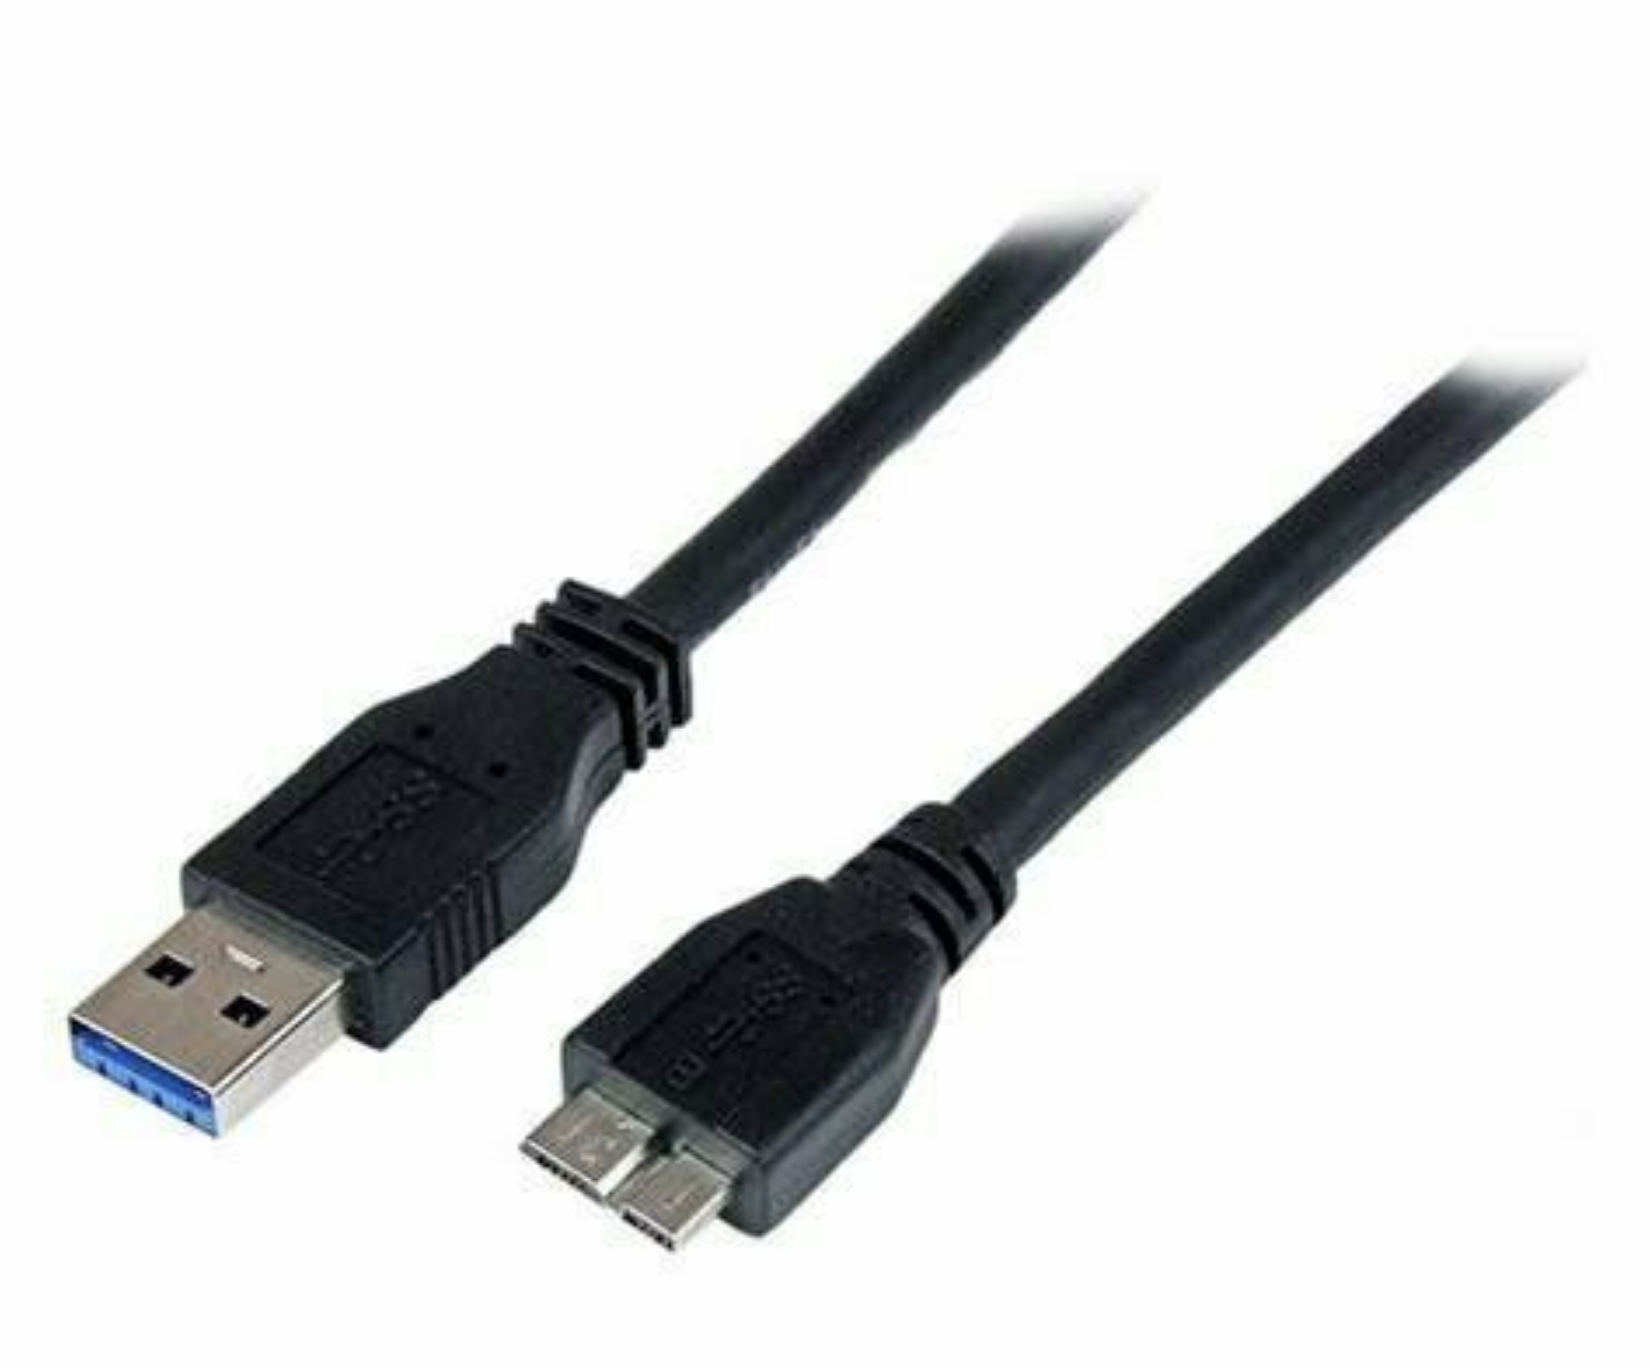 CamRanger USB 3.0 Micro Cable for D800 D800e D810